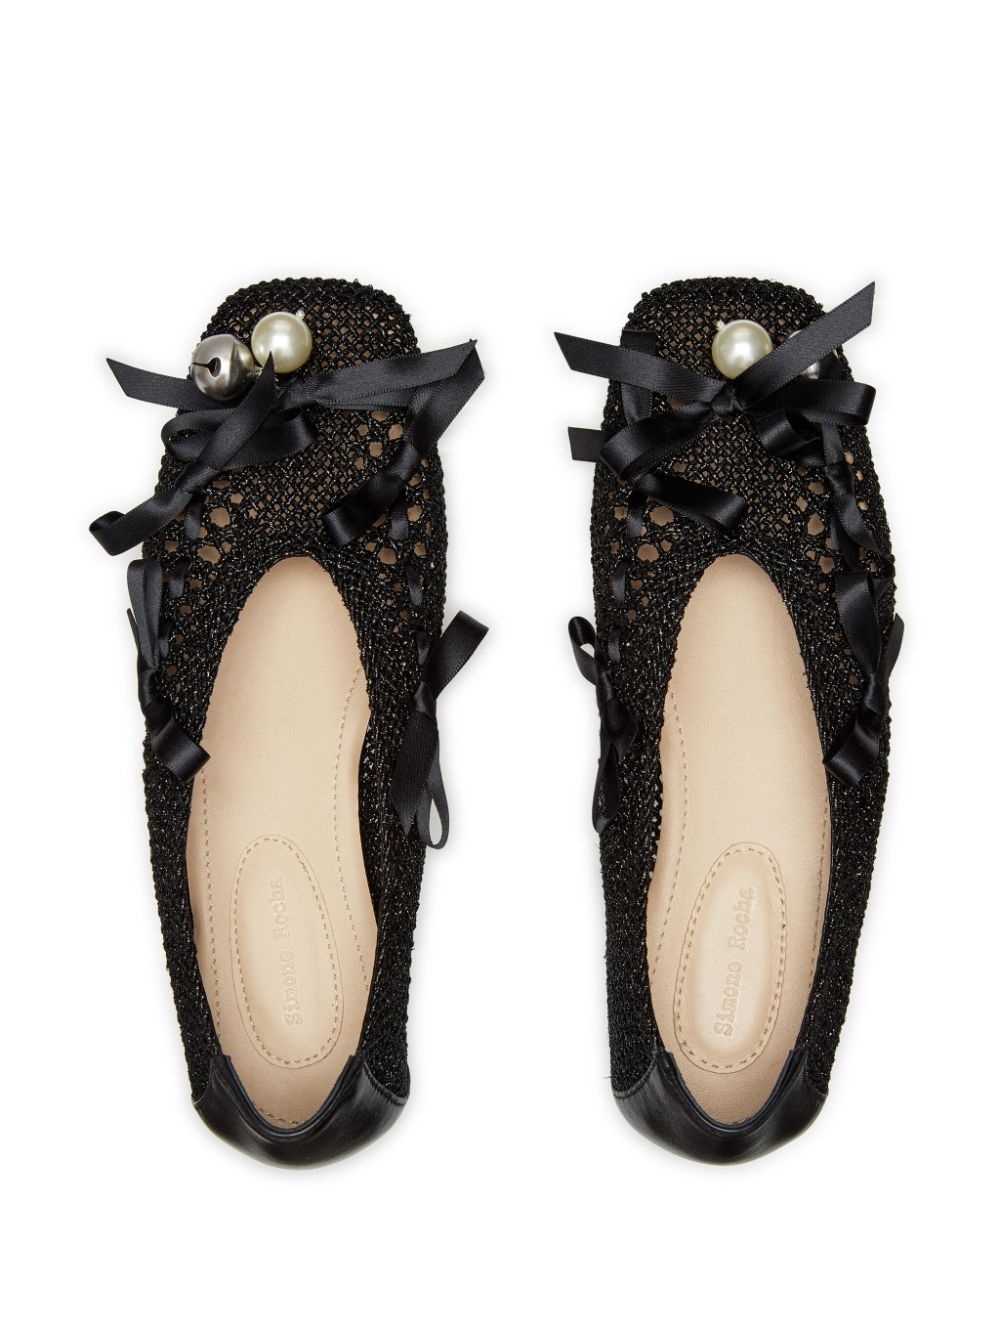 bell-charm crochet ballerina shoes - 5